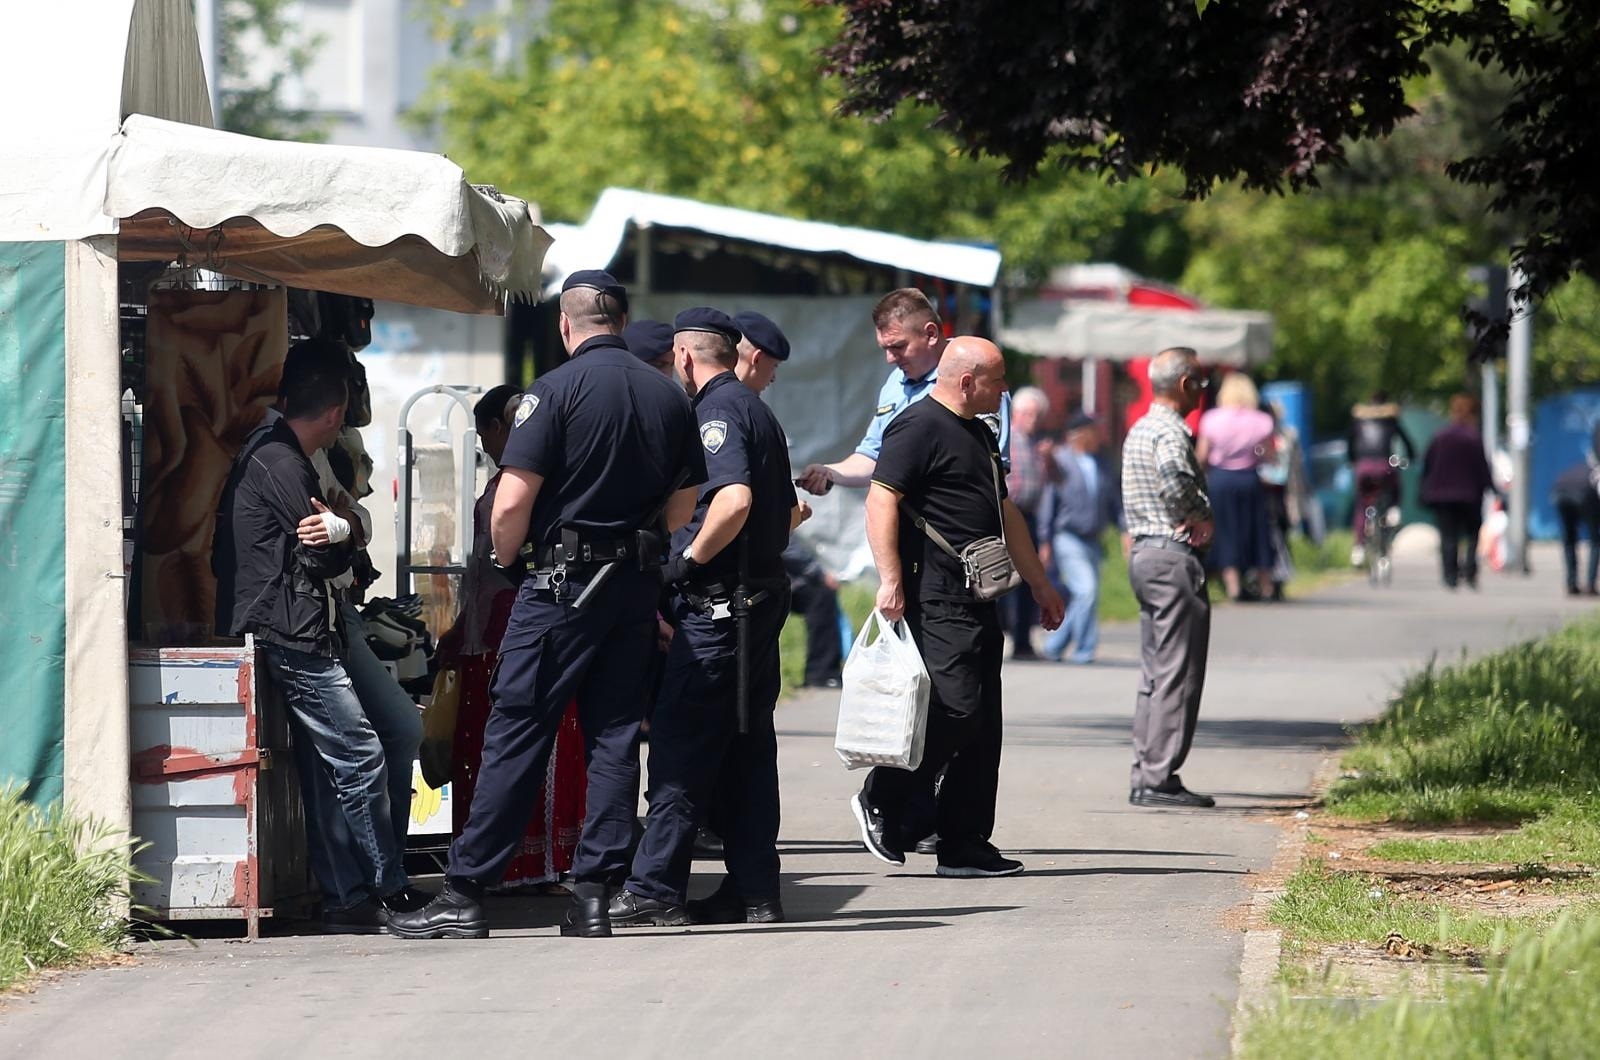 09.05.2014., Zagreb - Policijska racija na trznici u Dubravi.
Photo: Slavko Midzor/PIXSELL